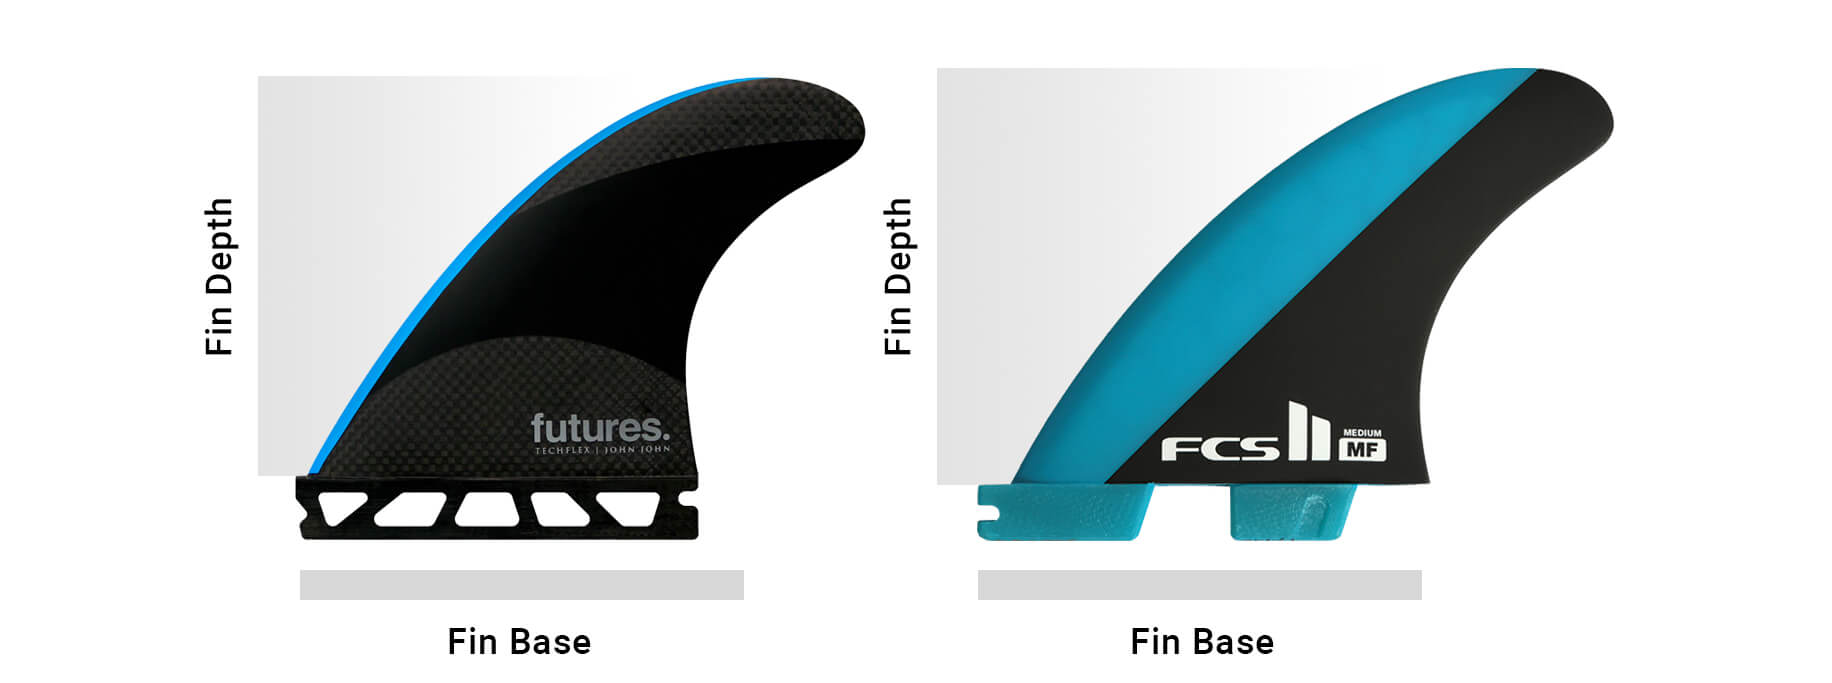 Surfboard Fin Base and Fin Depth Comparison